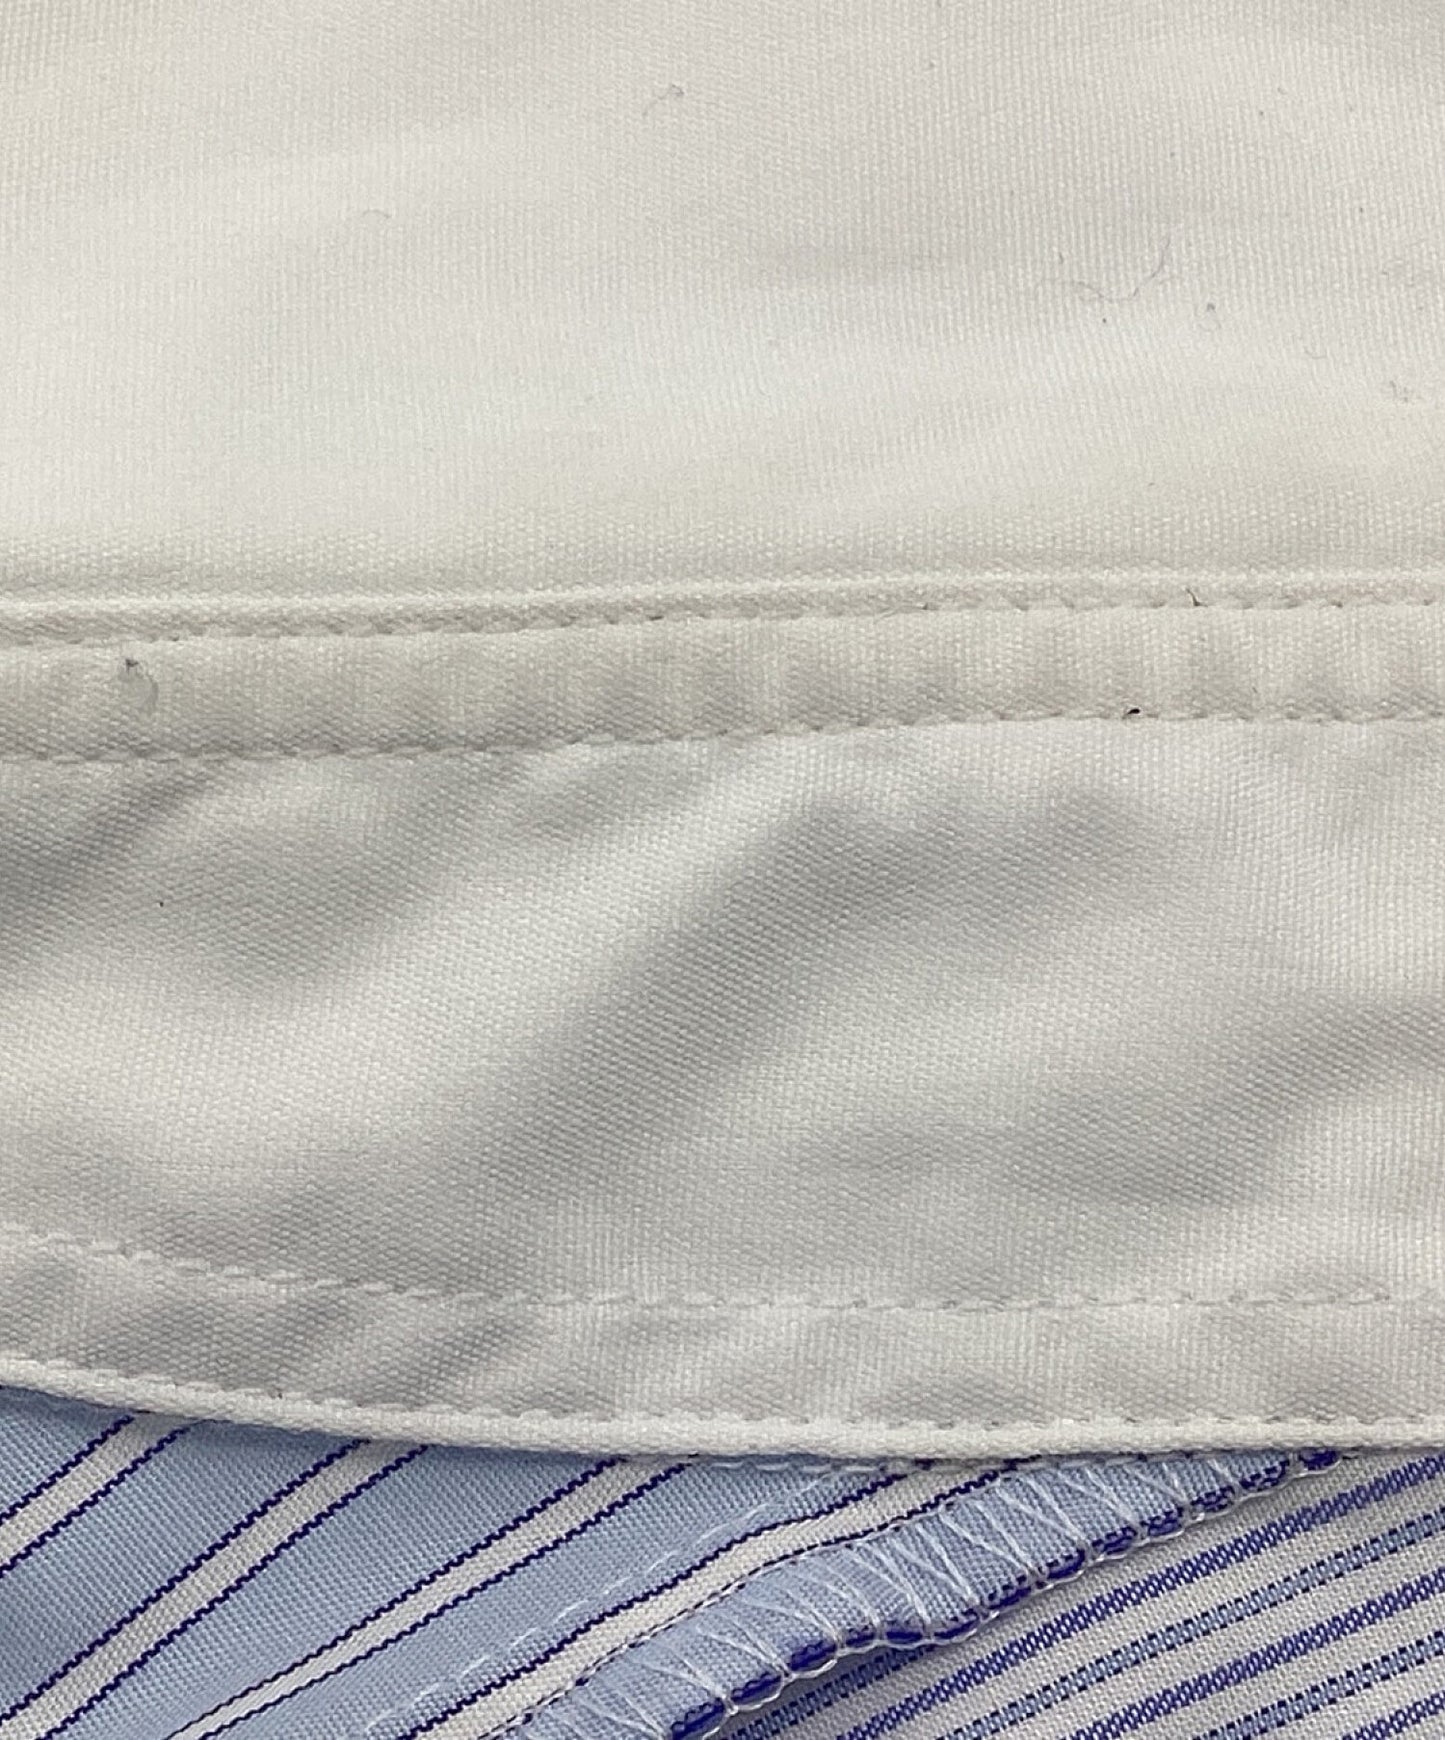 Comme des Garcons Homme Cotton Broadcthed Shirt HK-B002